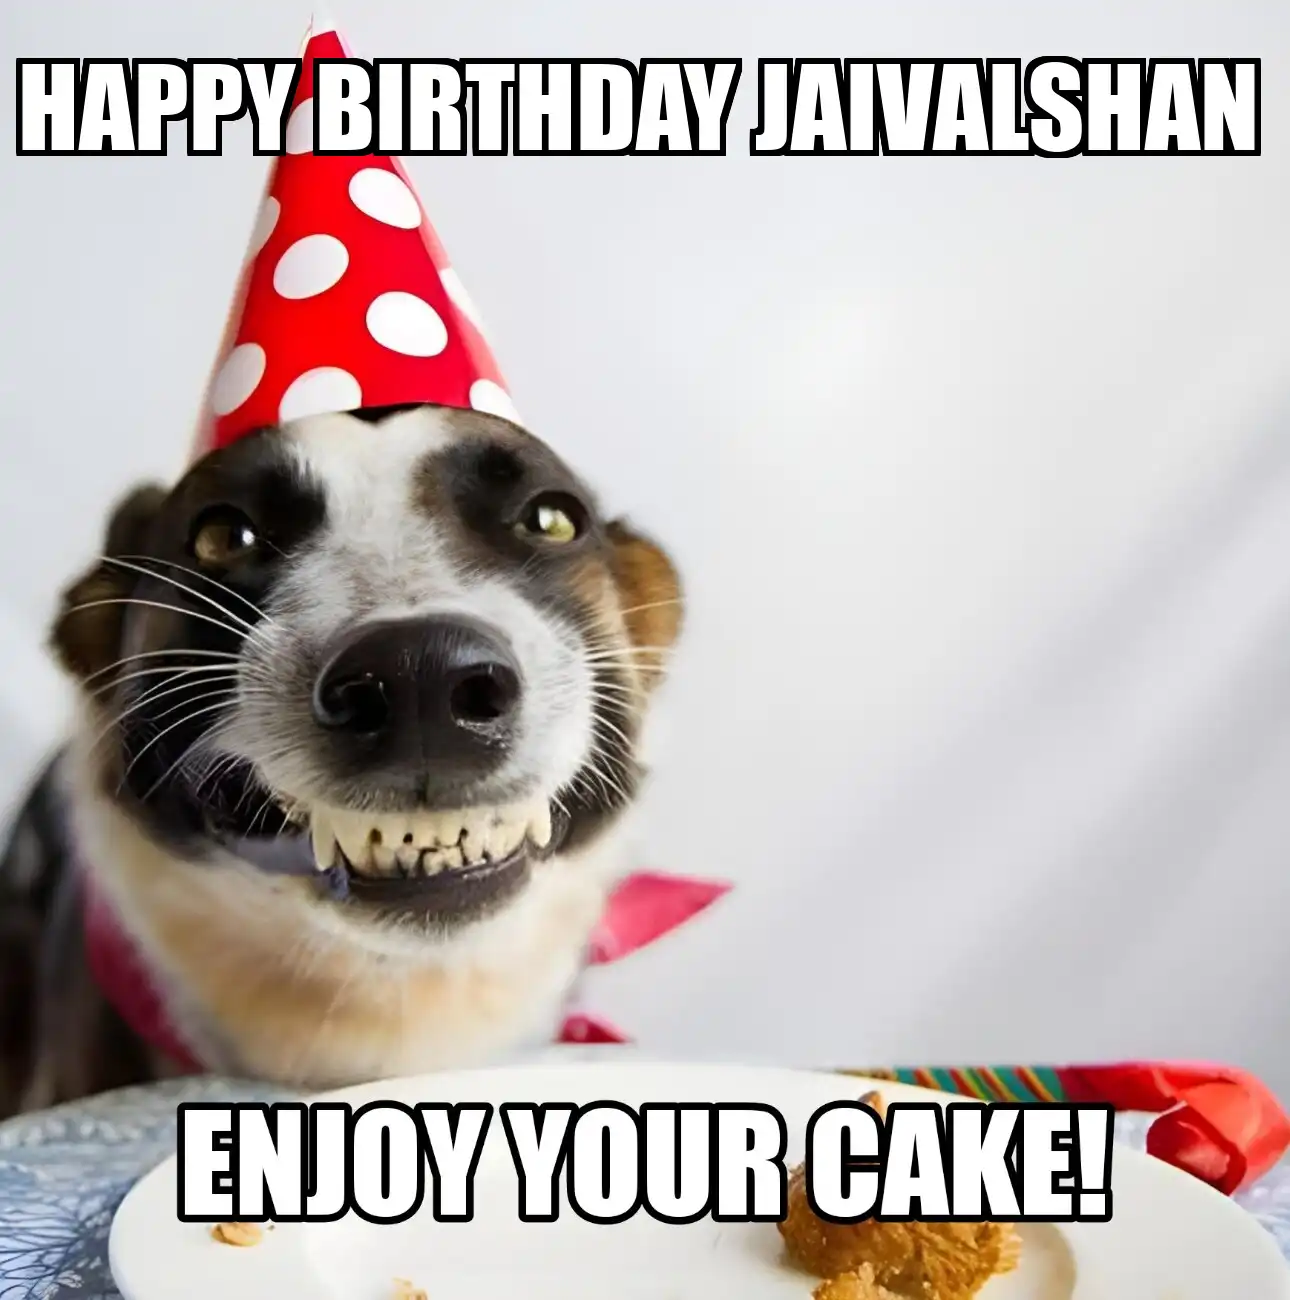 Happy Birthday Jaivalshan Enjoy Your Cake Dog Meme